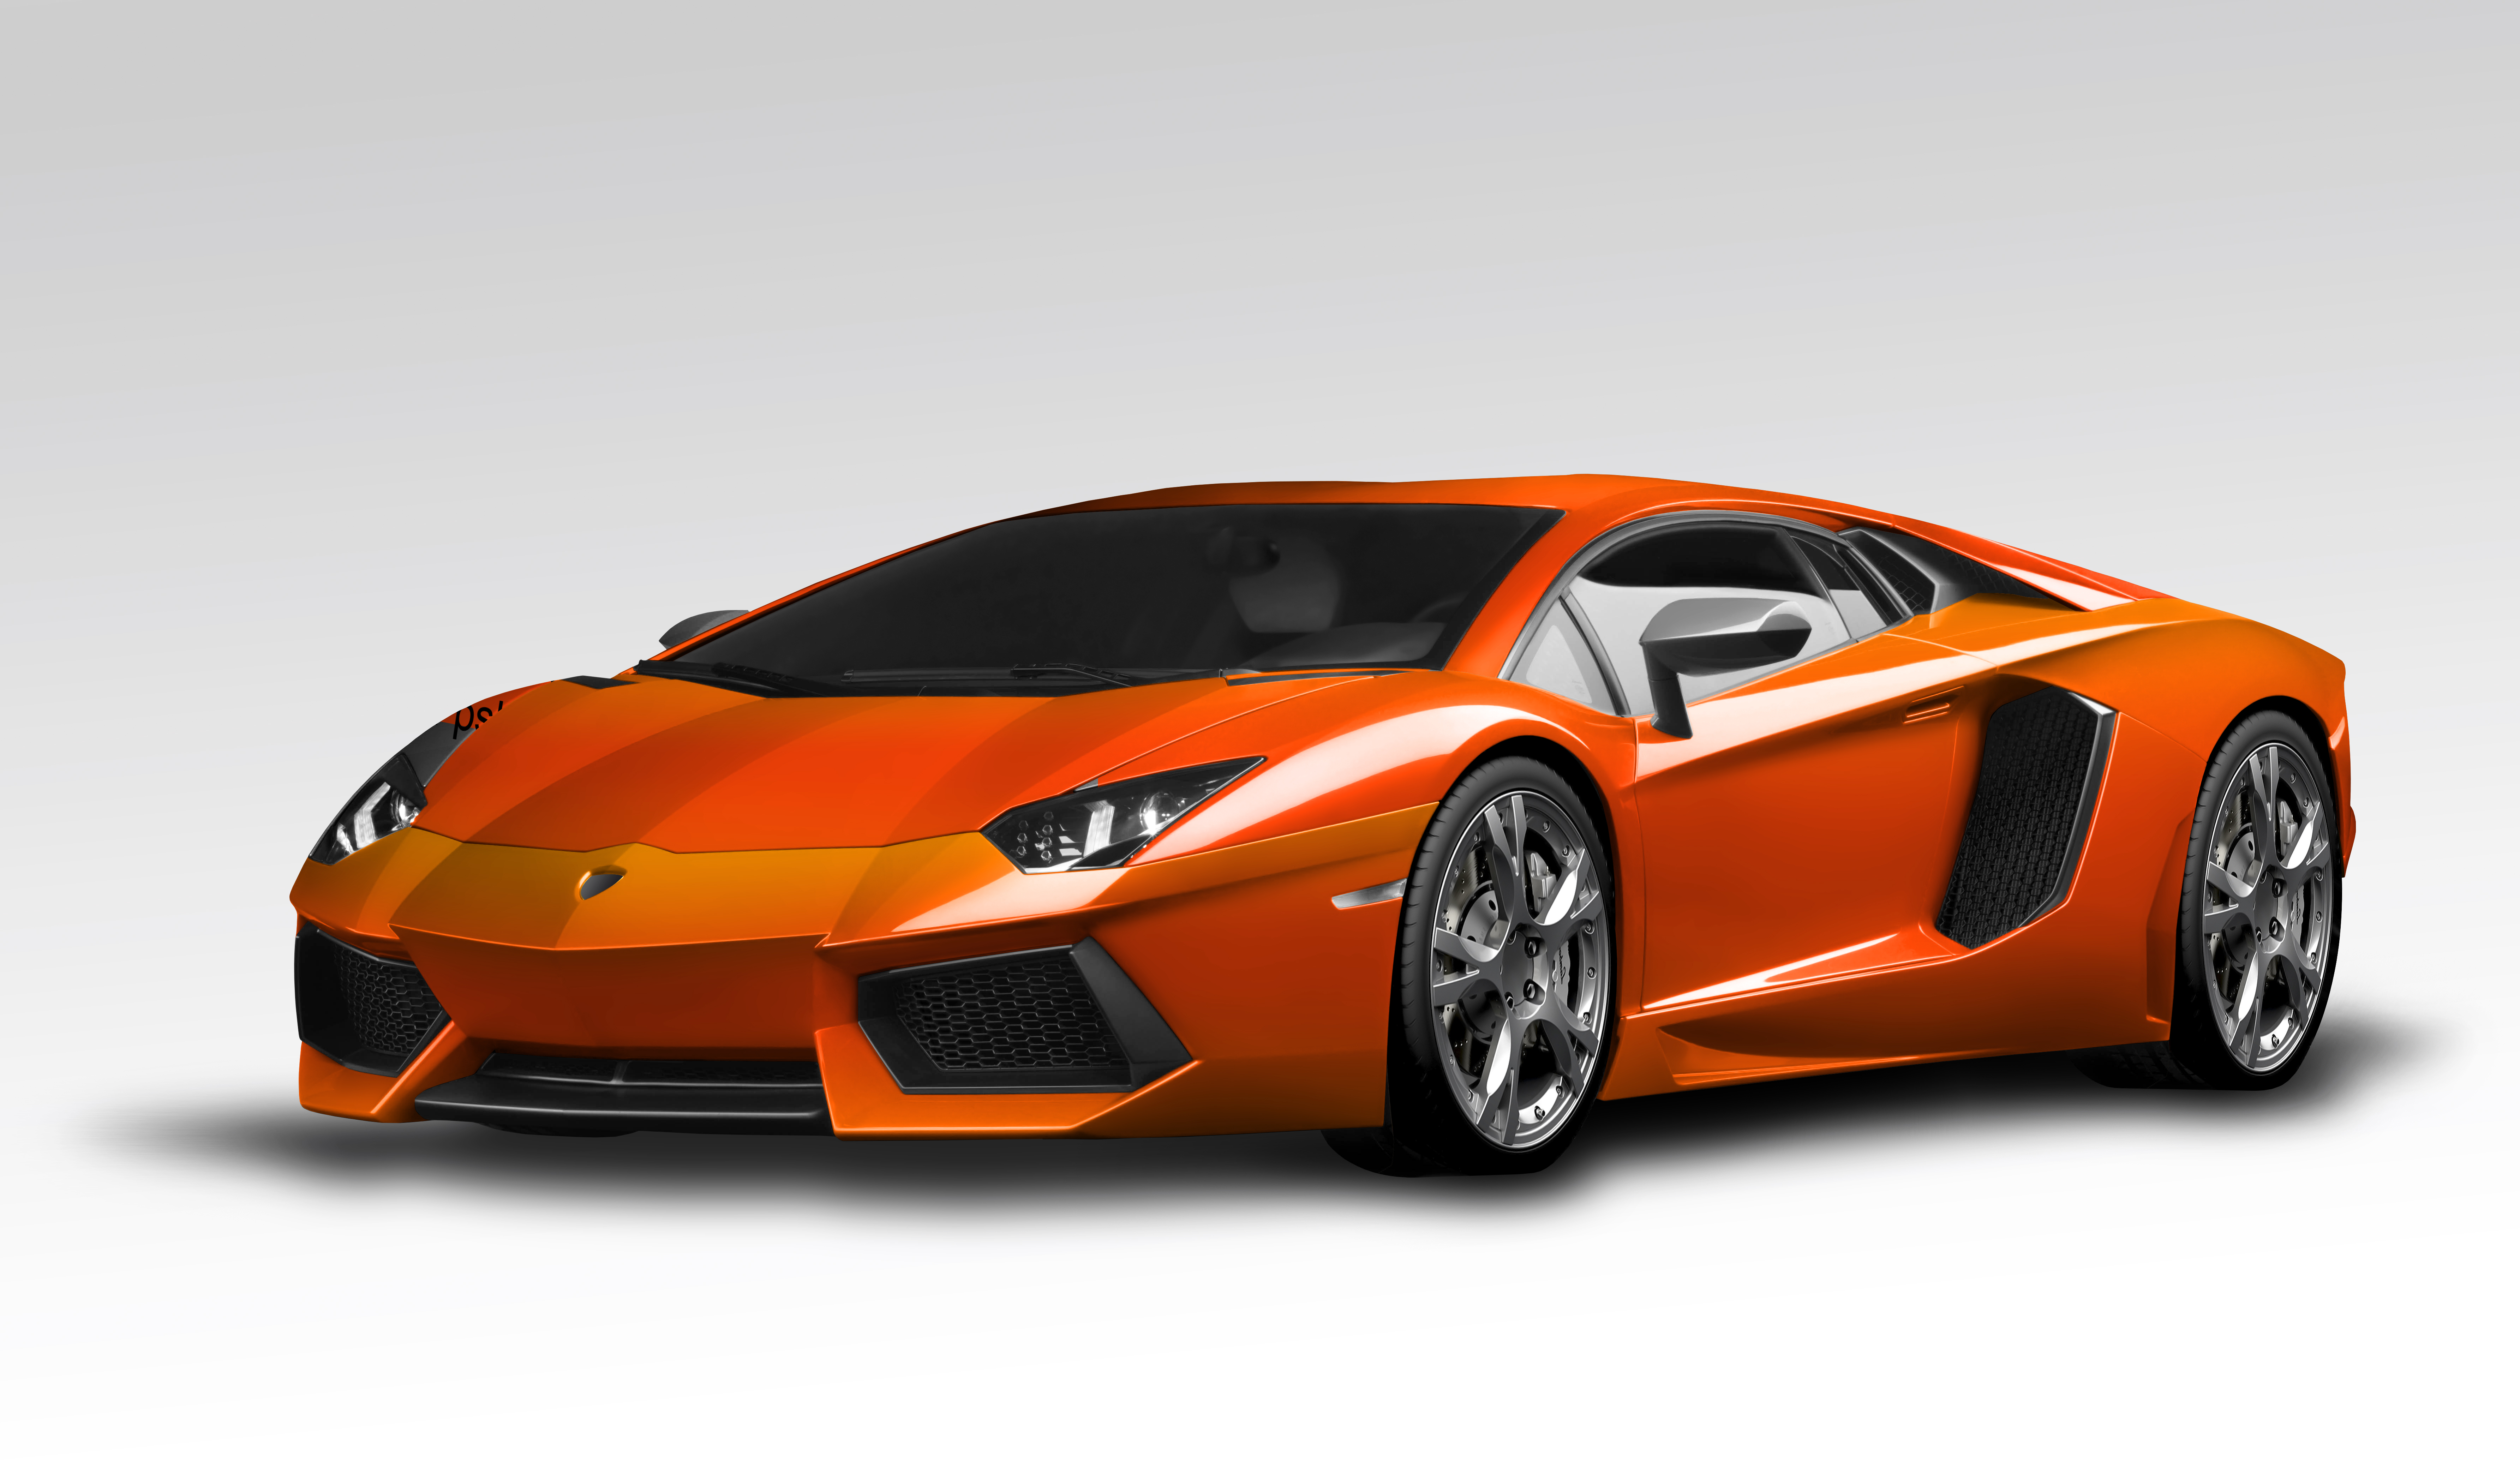 Free photo: Lamborghini Aventador Orange - Aventador, Car ...